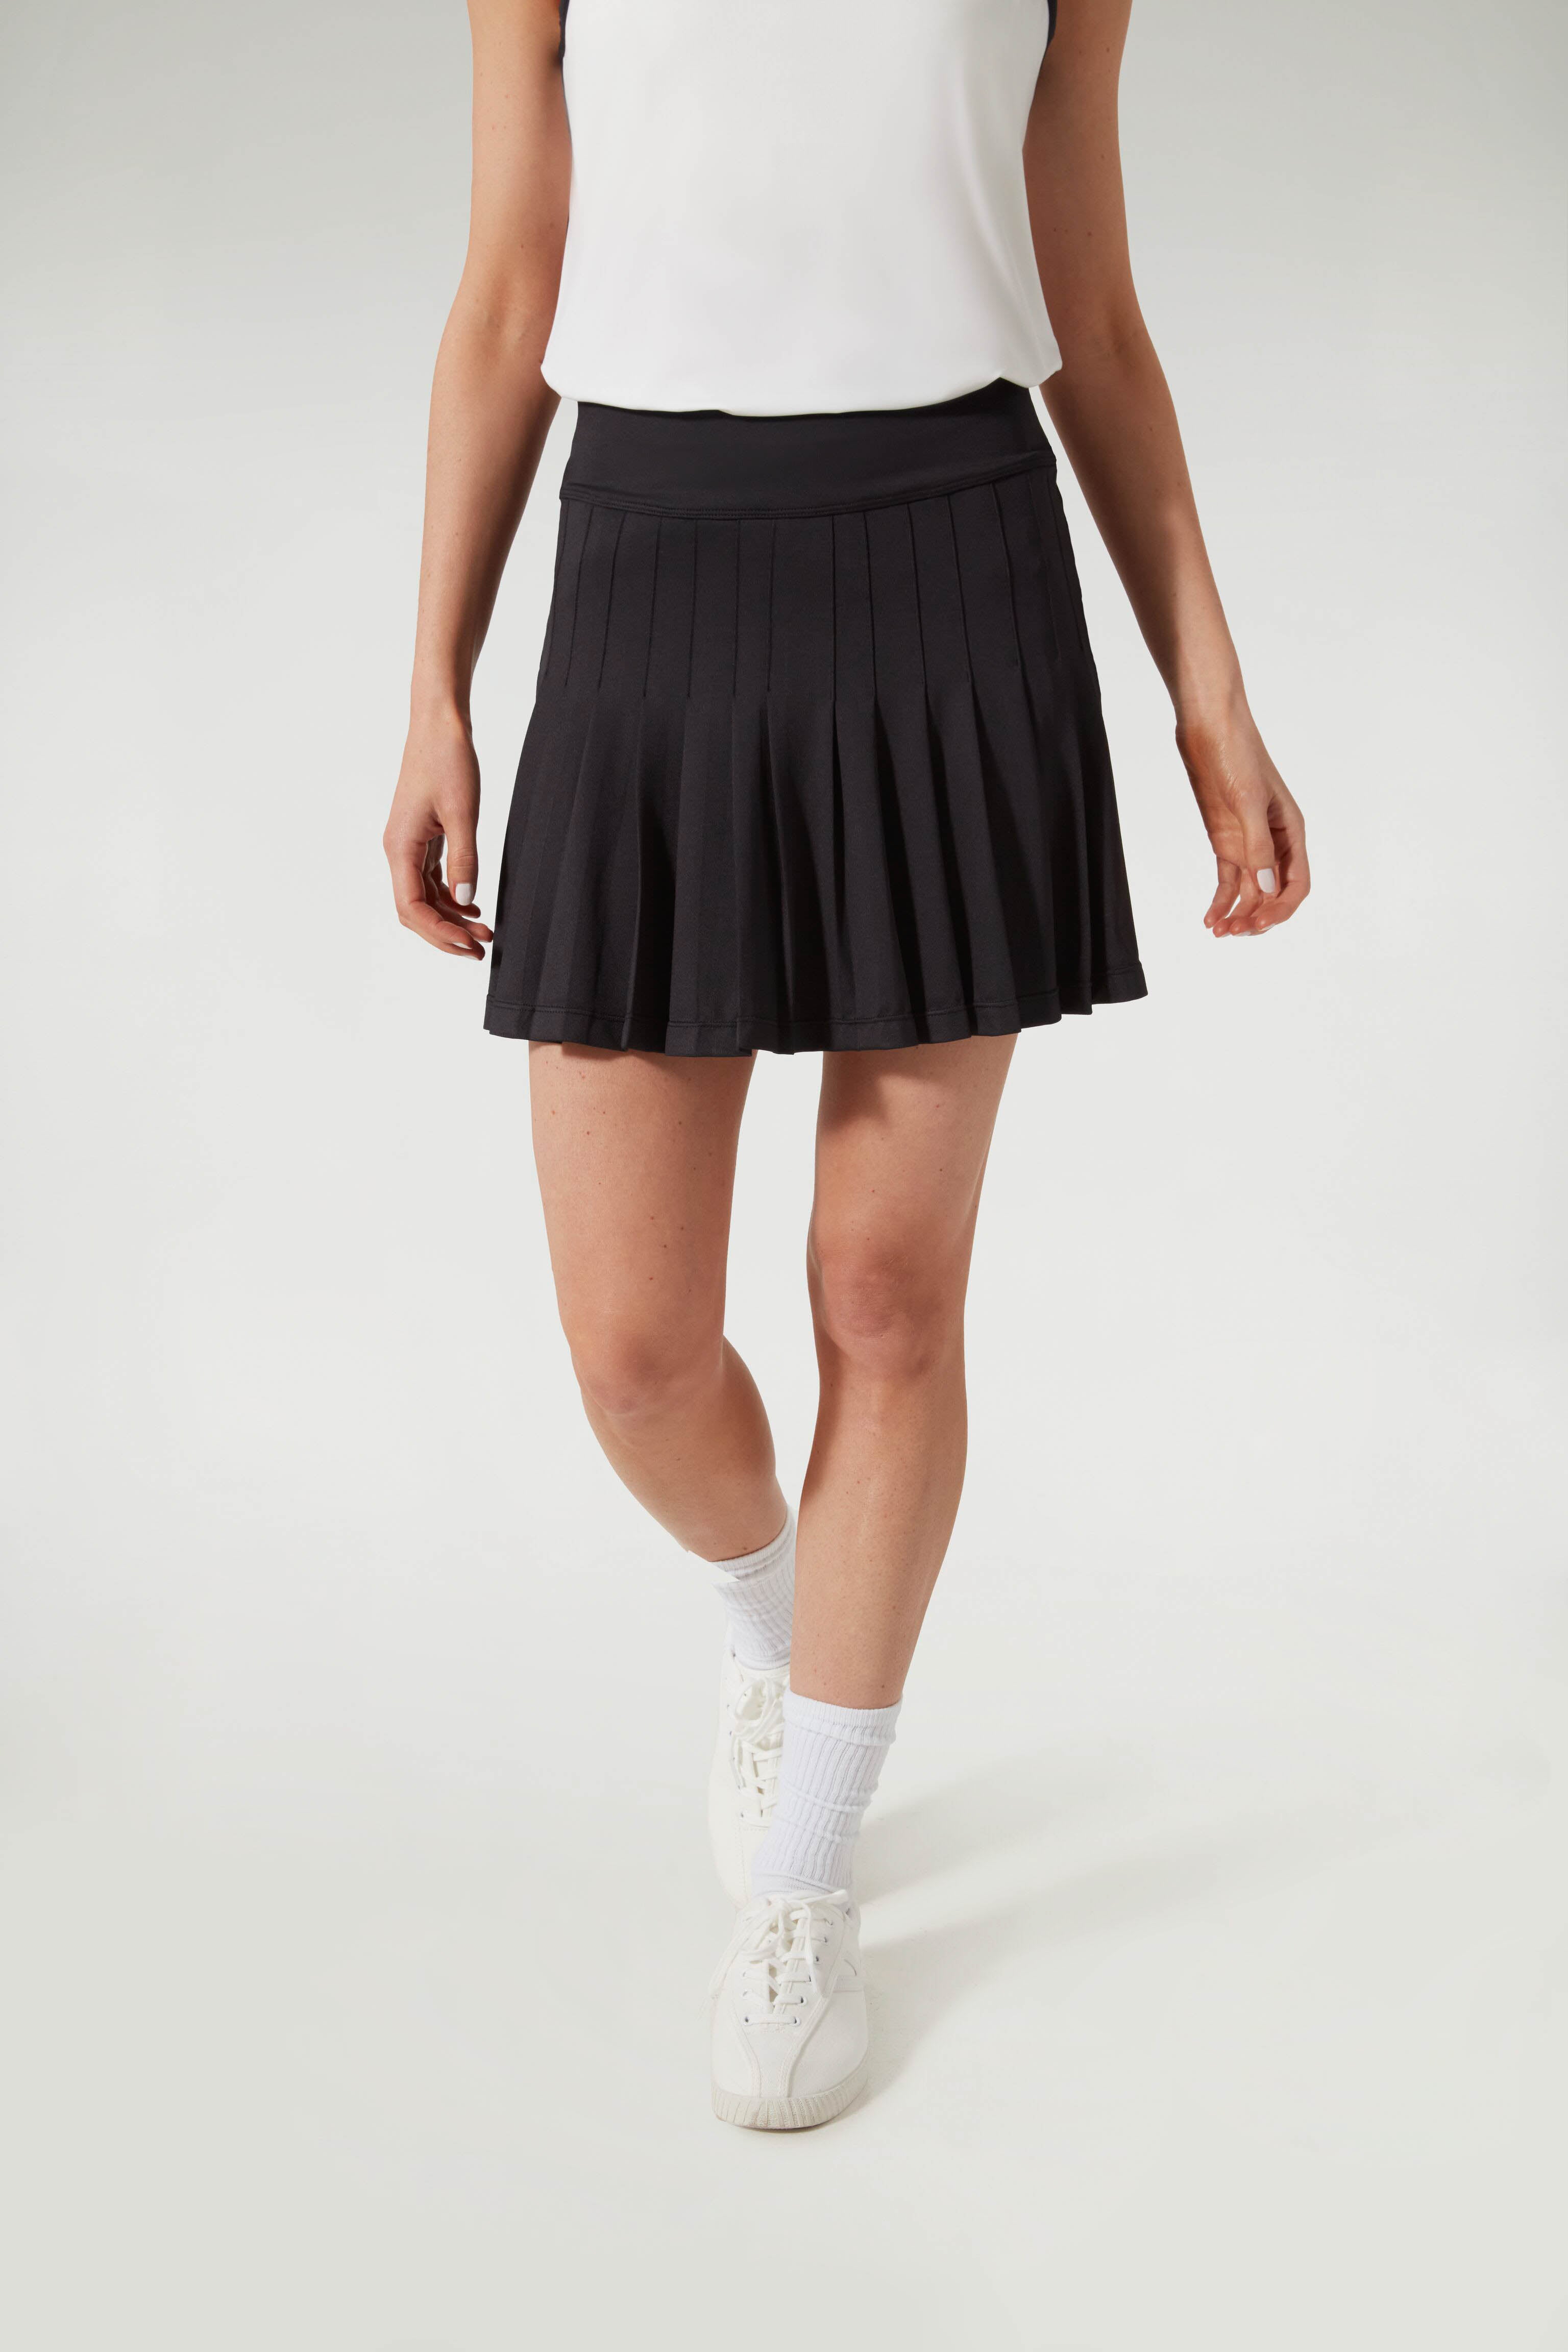 Black and White 15 Inch Tennis Skirt